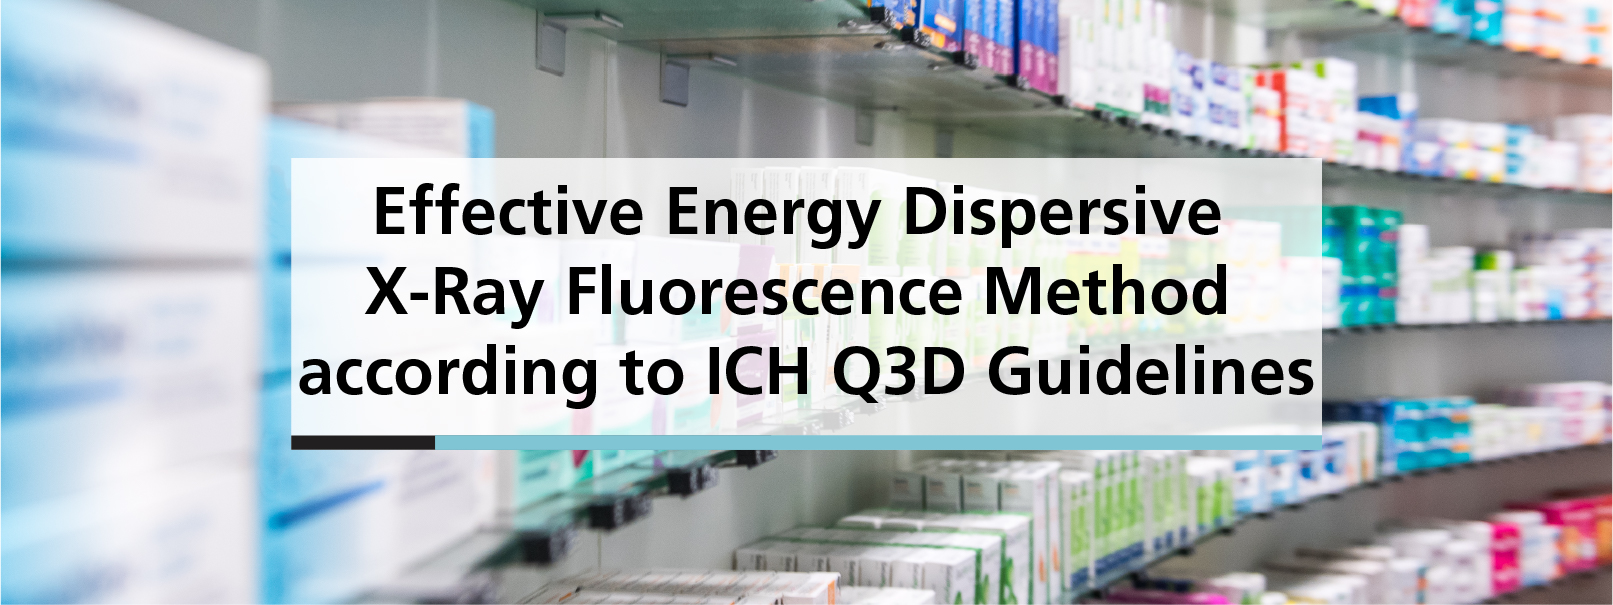 Effective Energy Dispersive X-Ray Fluorescence Method according to ICP Q3D Guidelines